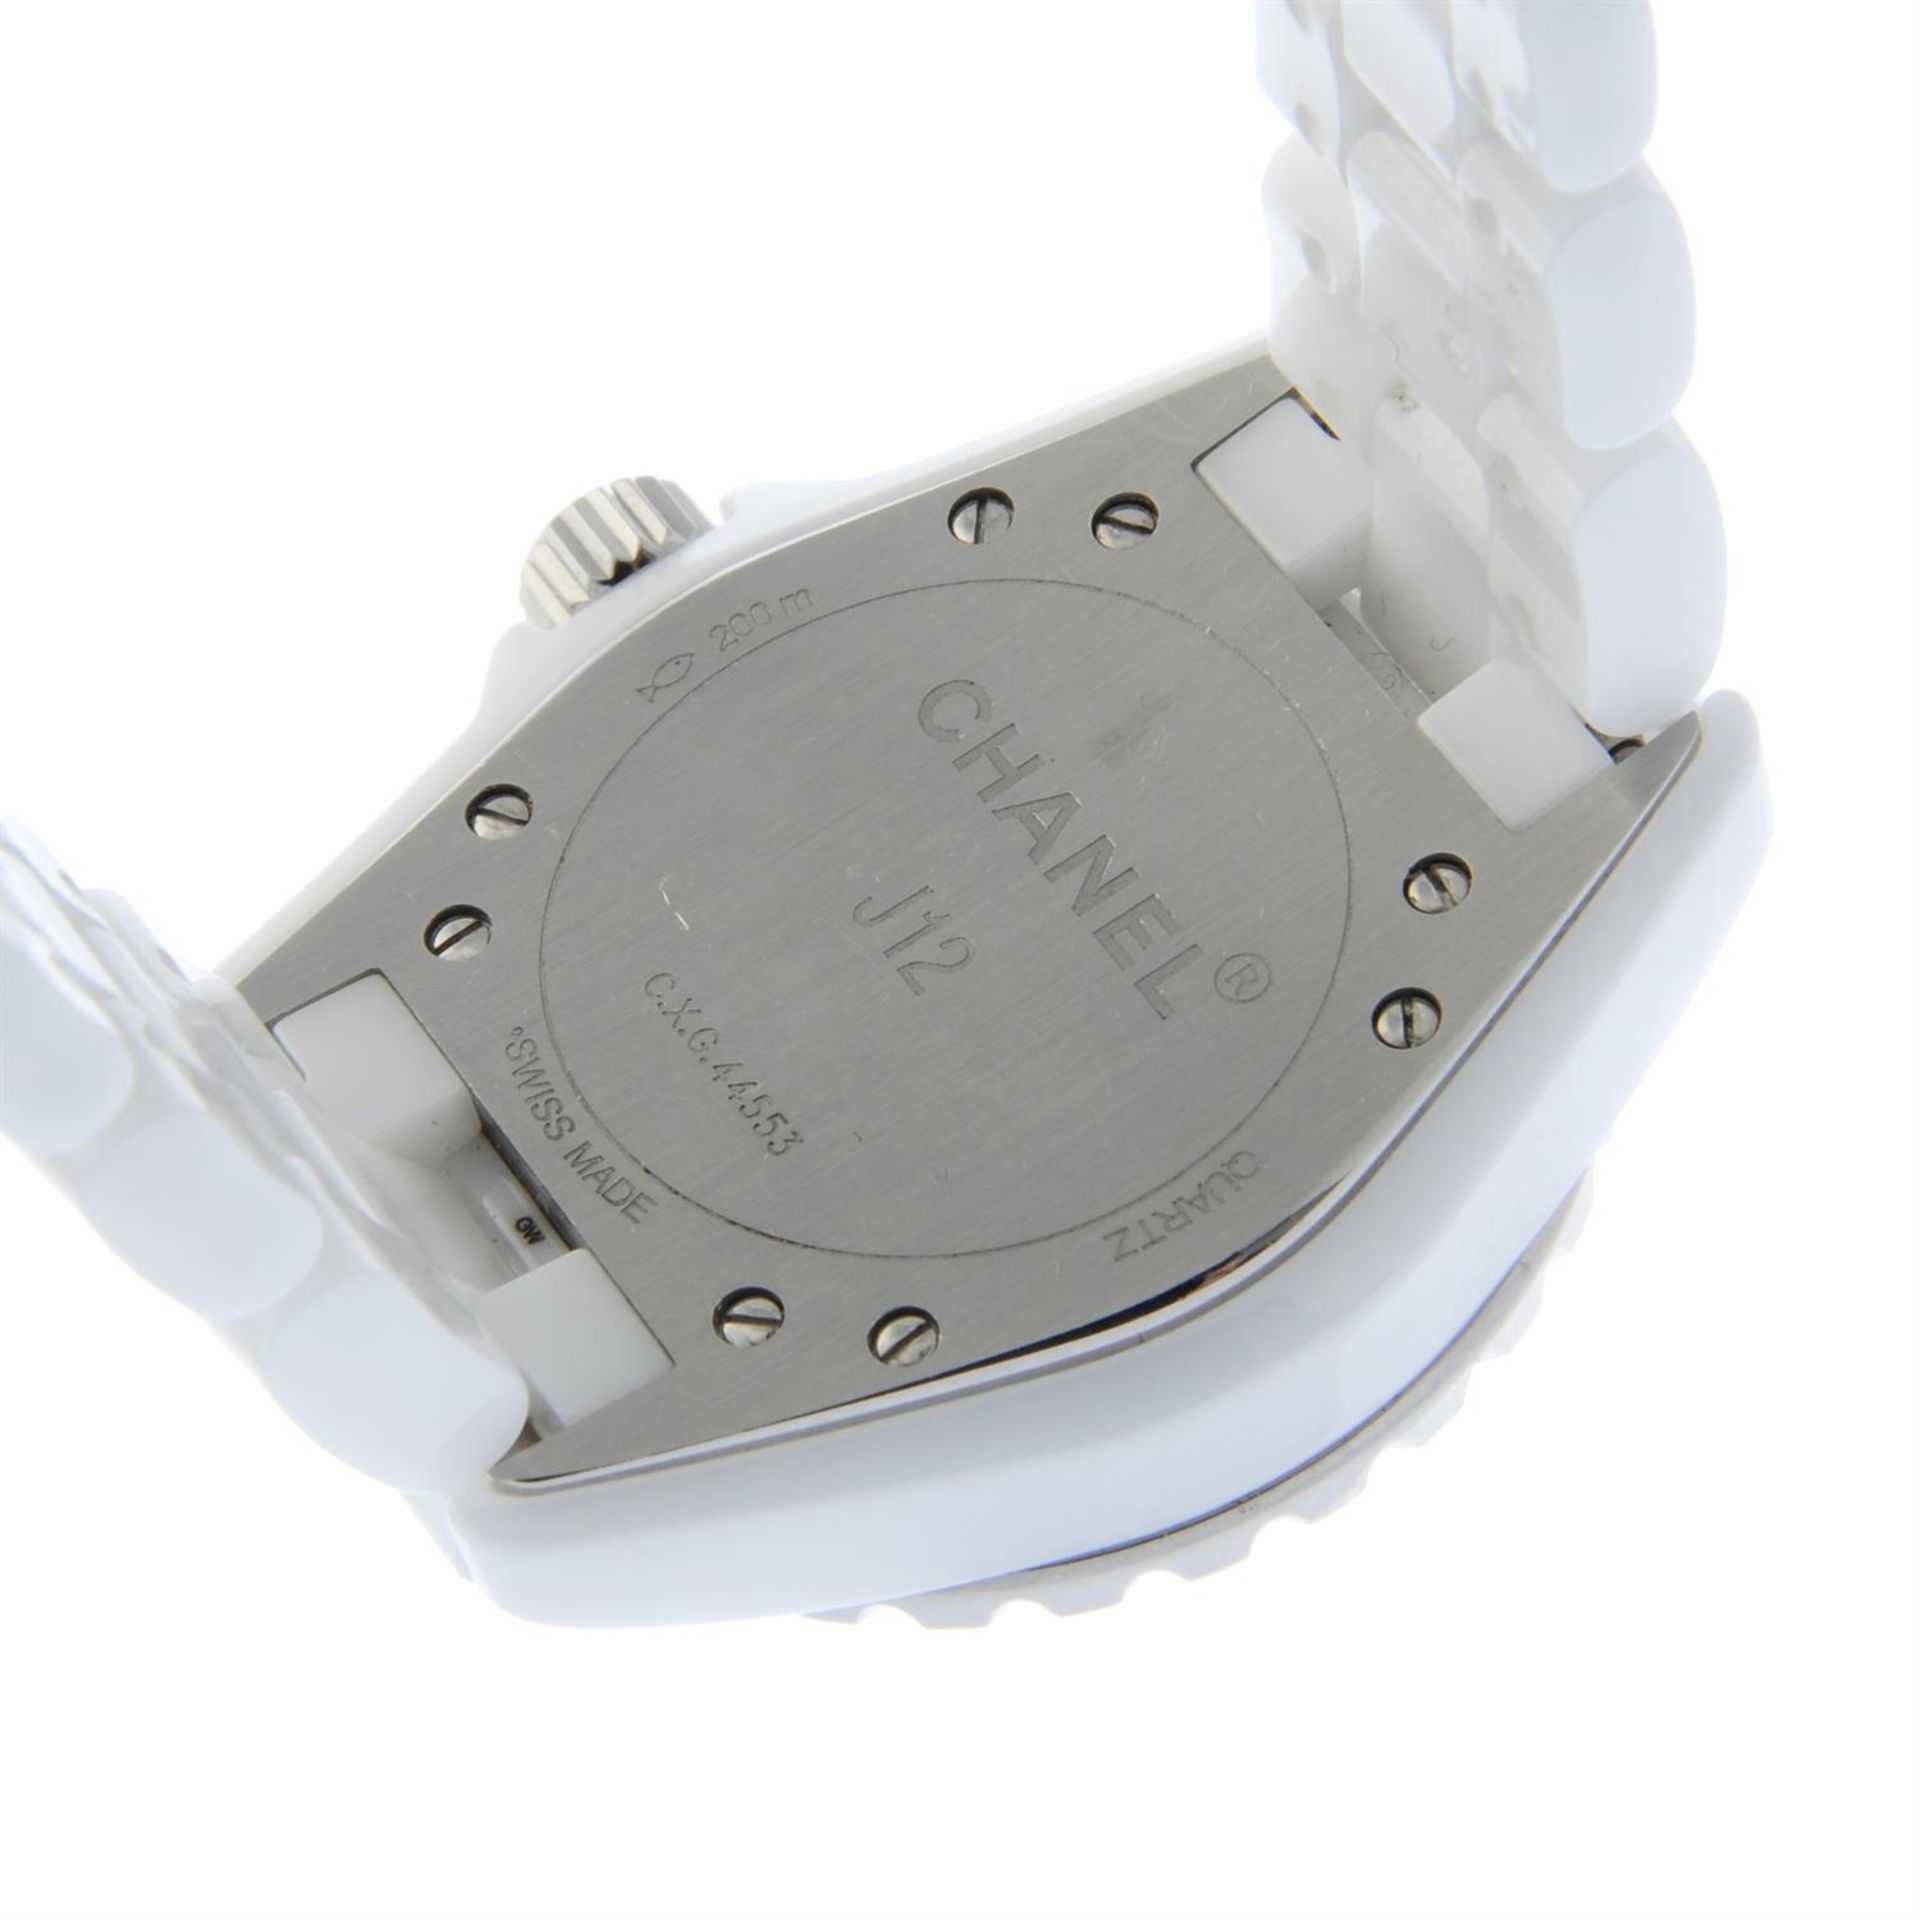 CHANEL - a ceramic J12 bracelet watch, 34mm. - Image 4 of 5